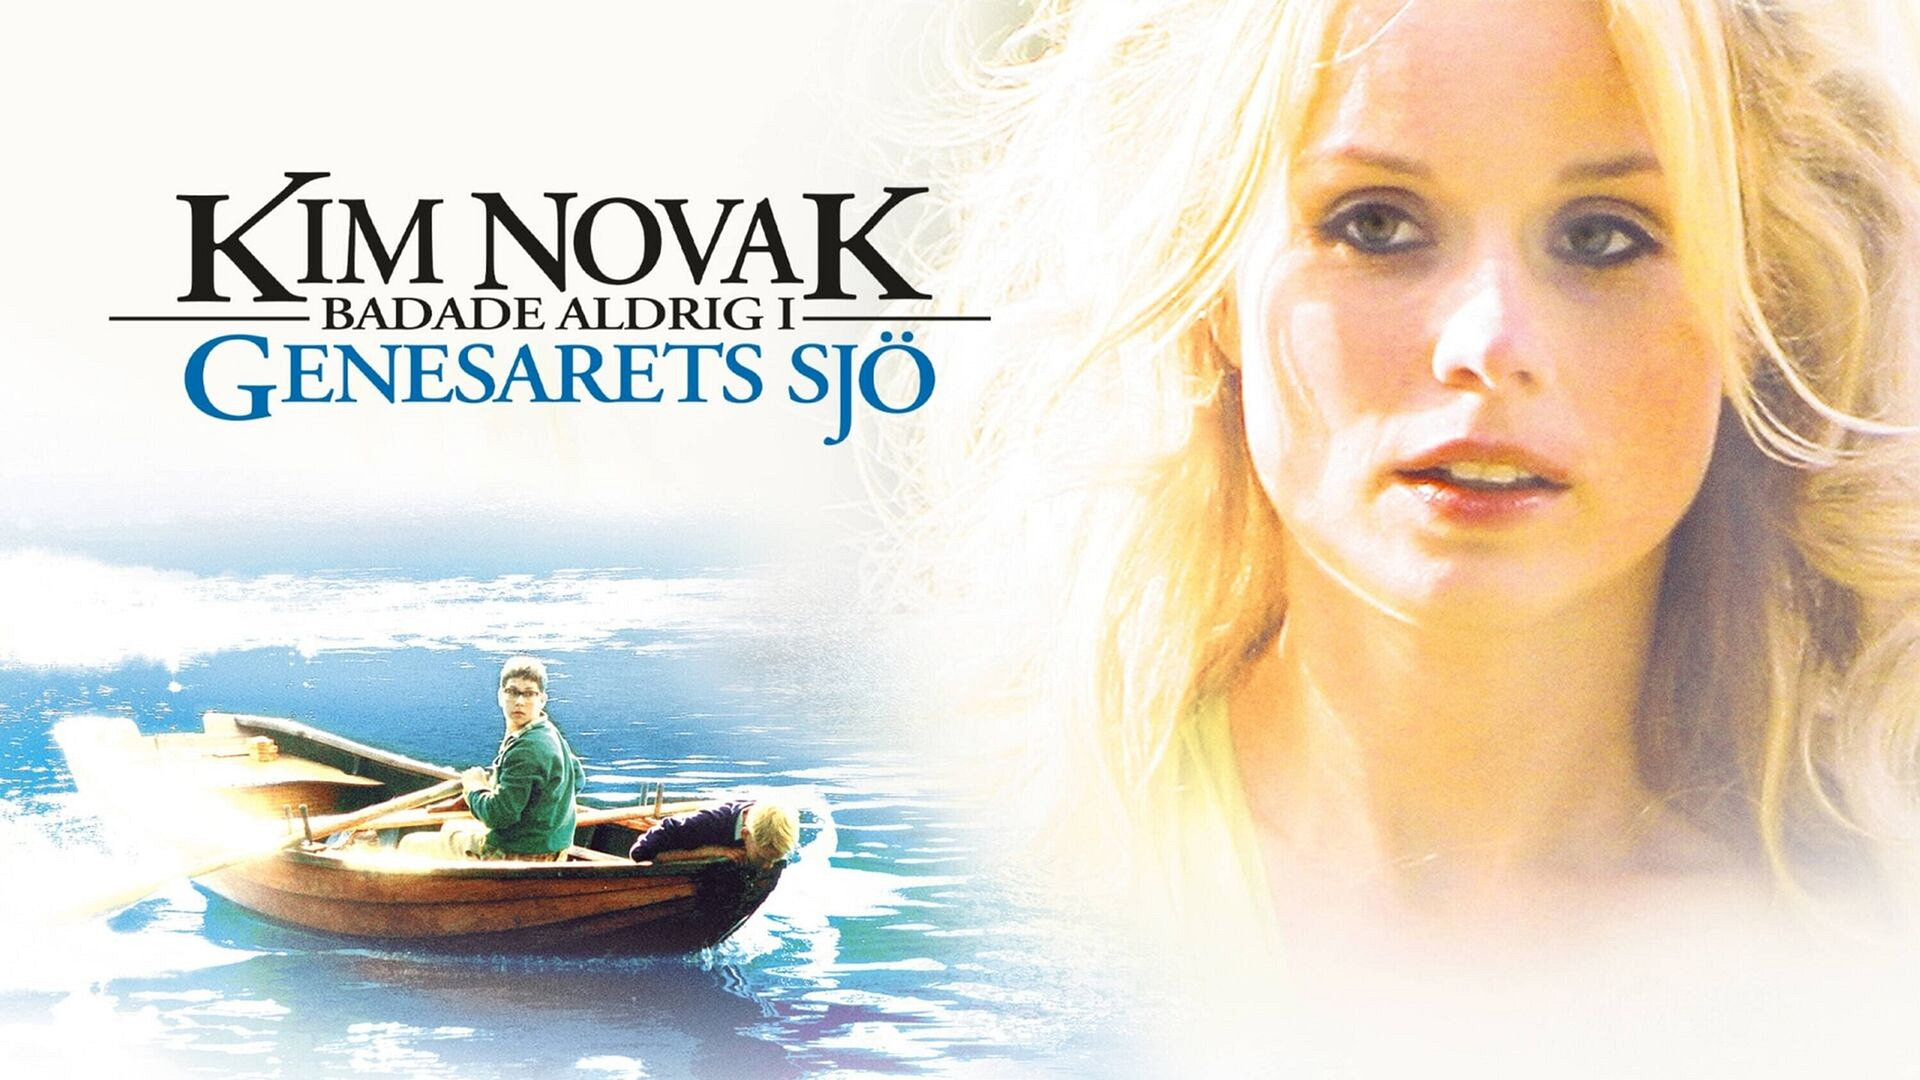 Kim Novak badet aldri i Genesaretsjøen